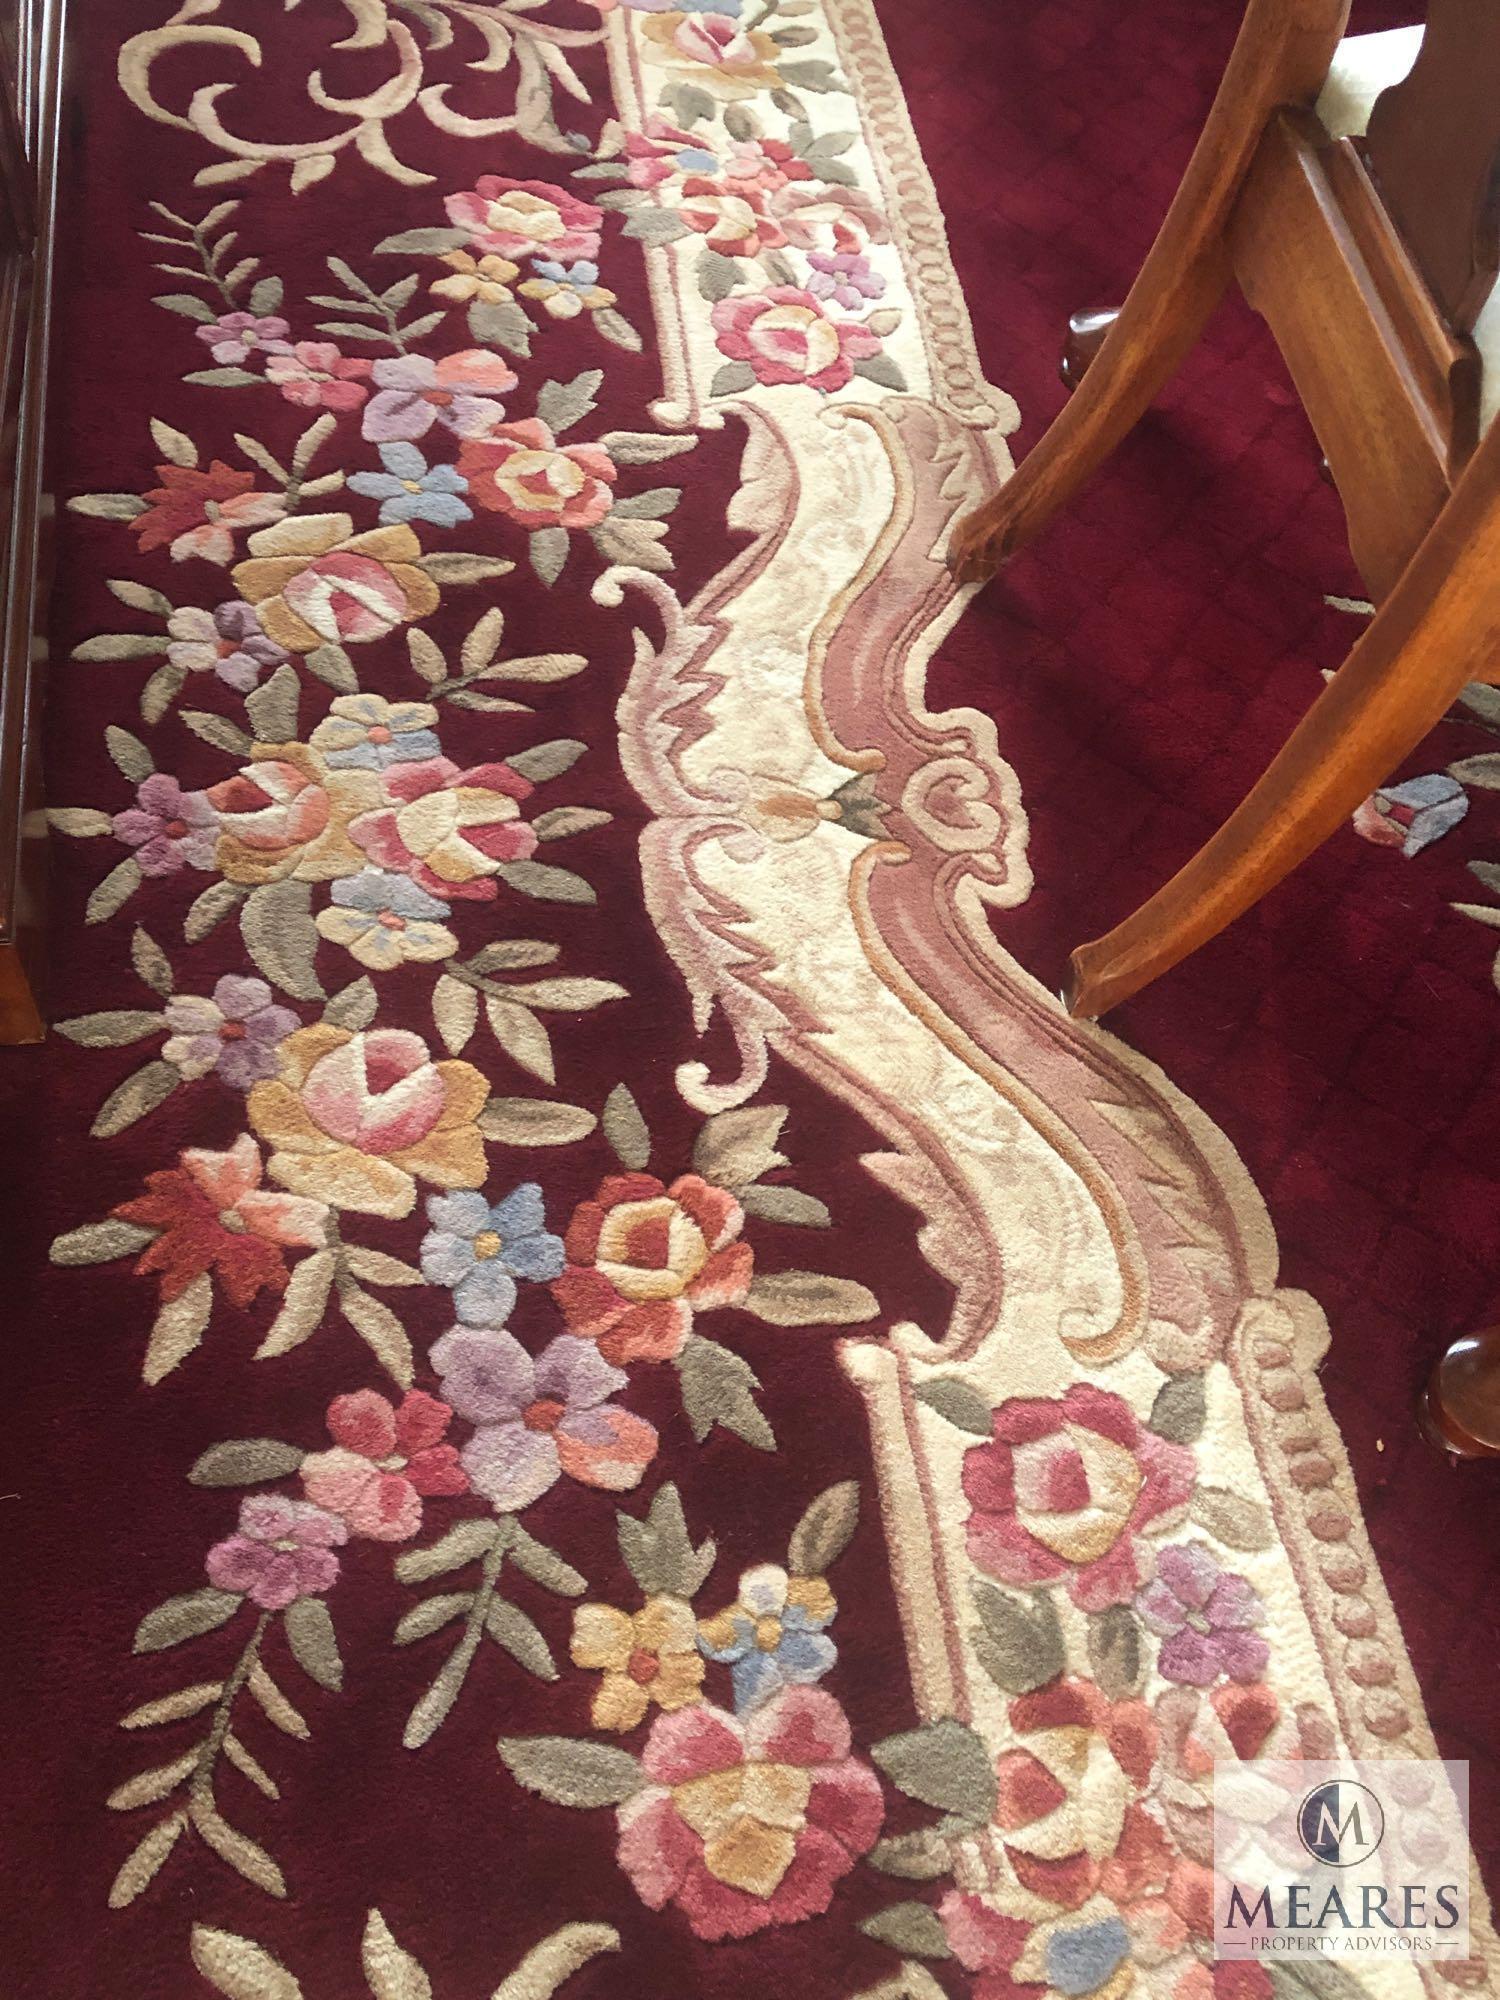 Royal Palace 100% Wool Area Rug 9' x 12' Burgundy & Ivory Floral Design